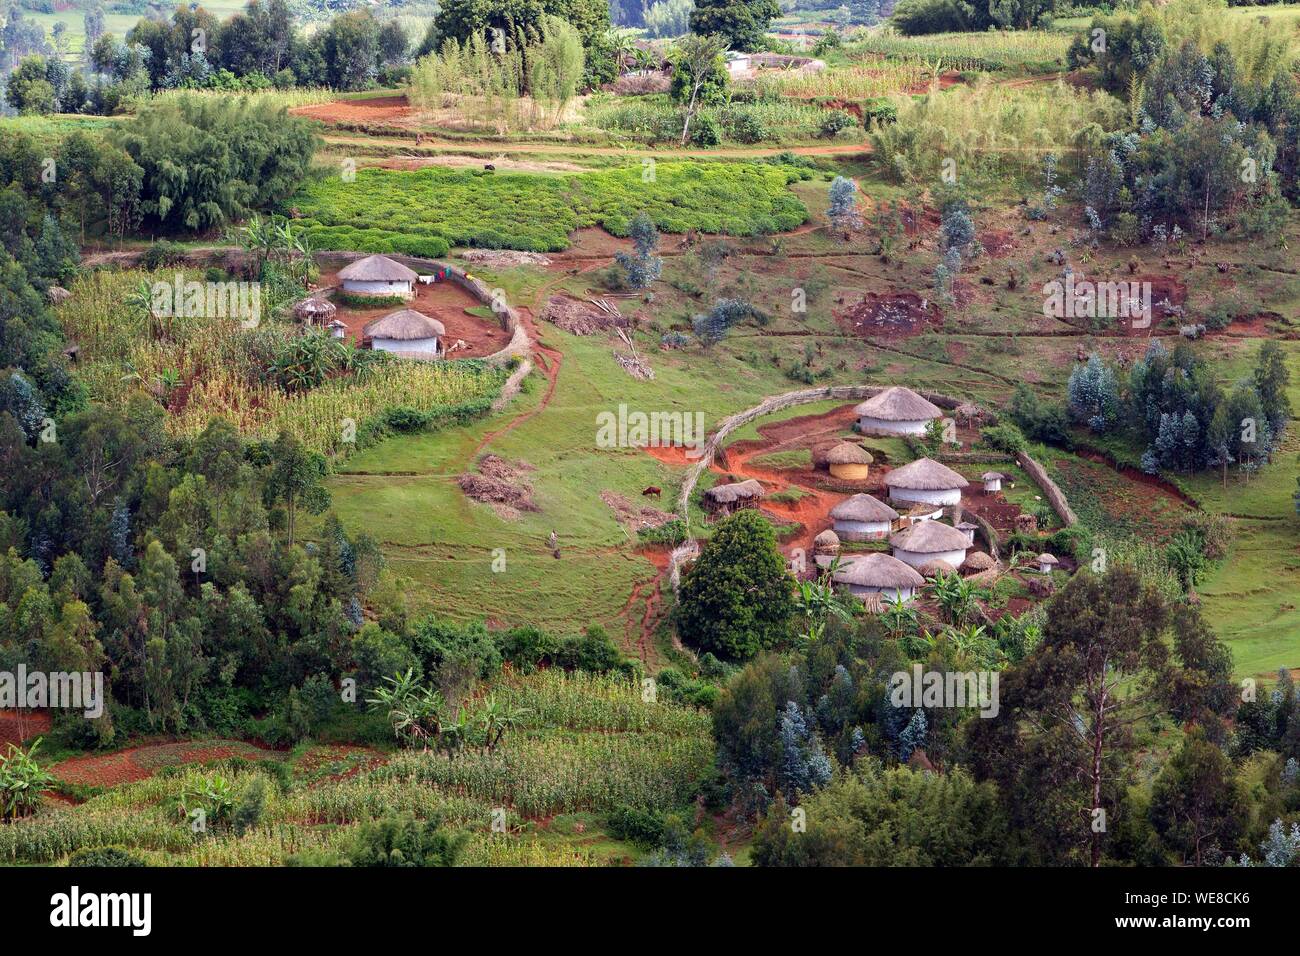 Burundi, Mugamba, Trays, country with a thousand hills, traditional rugos habitat Stock Photo